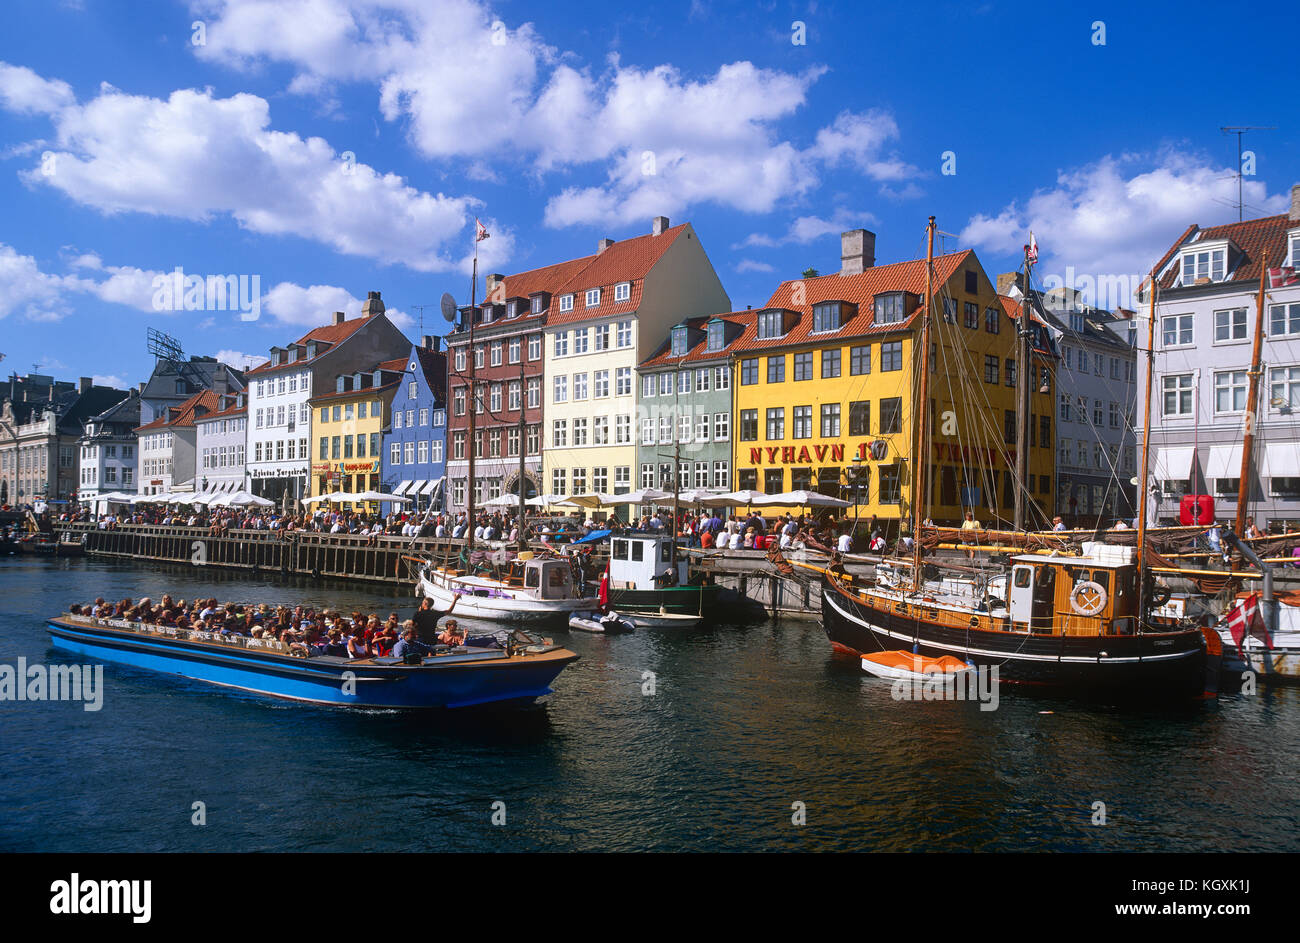 Tourists on pleasure boat, Nyhavn, Copenhagen, Denmark Stock Photo